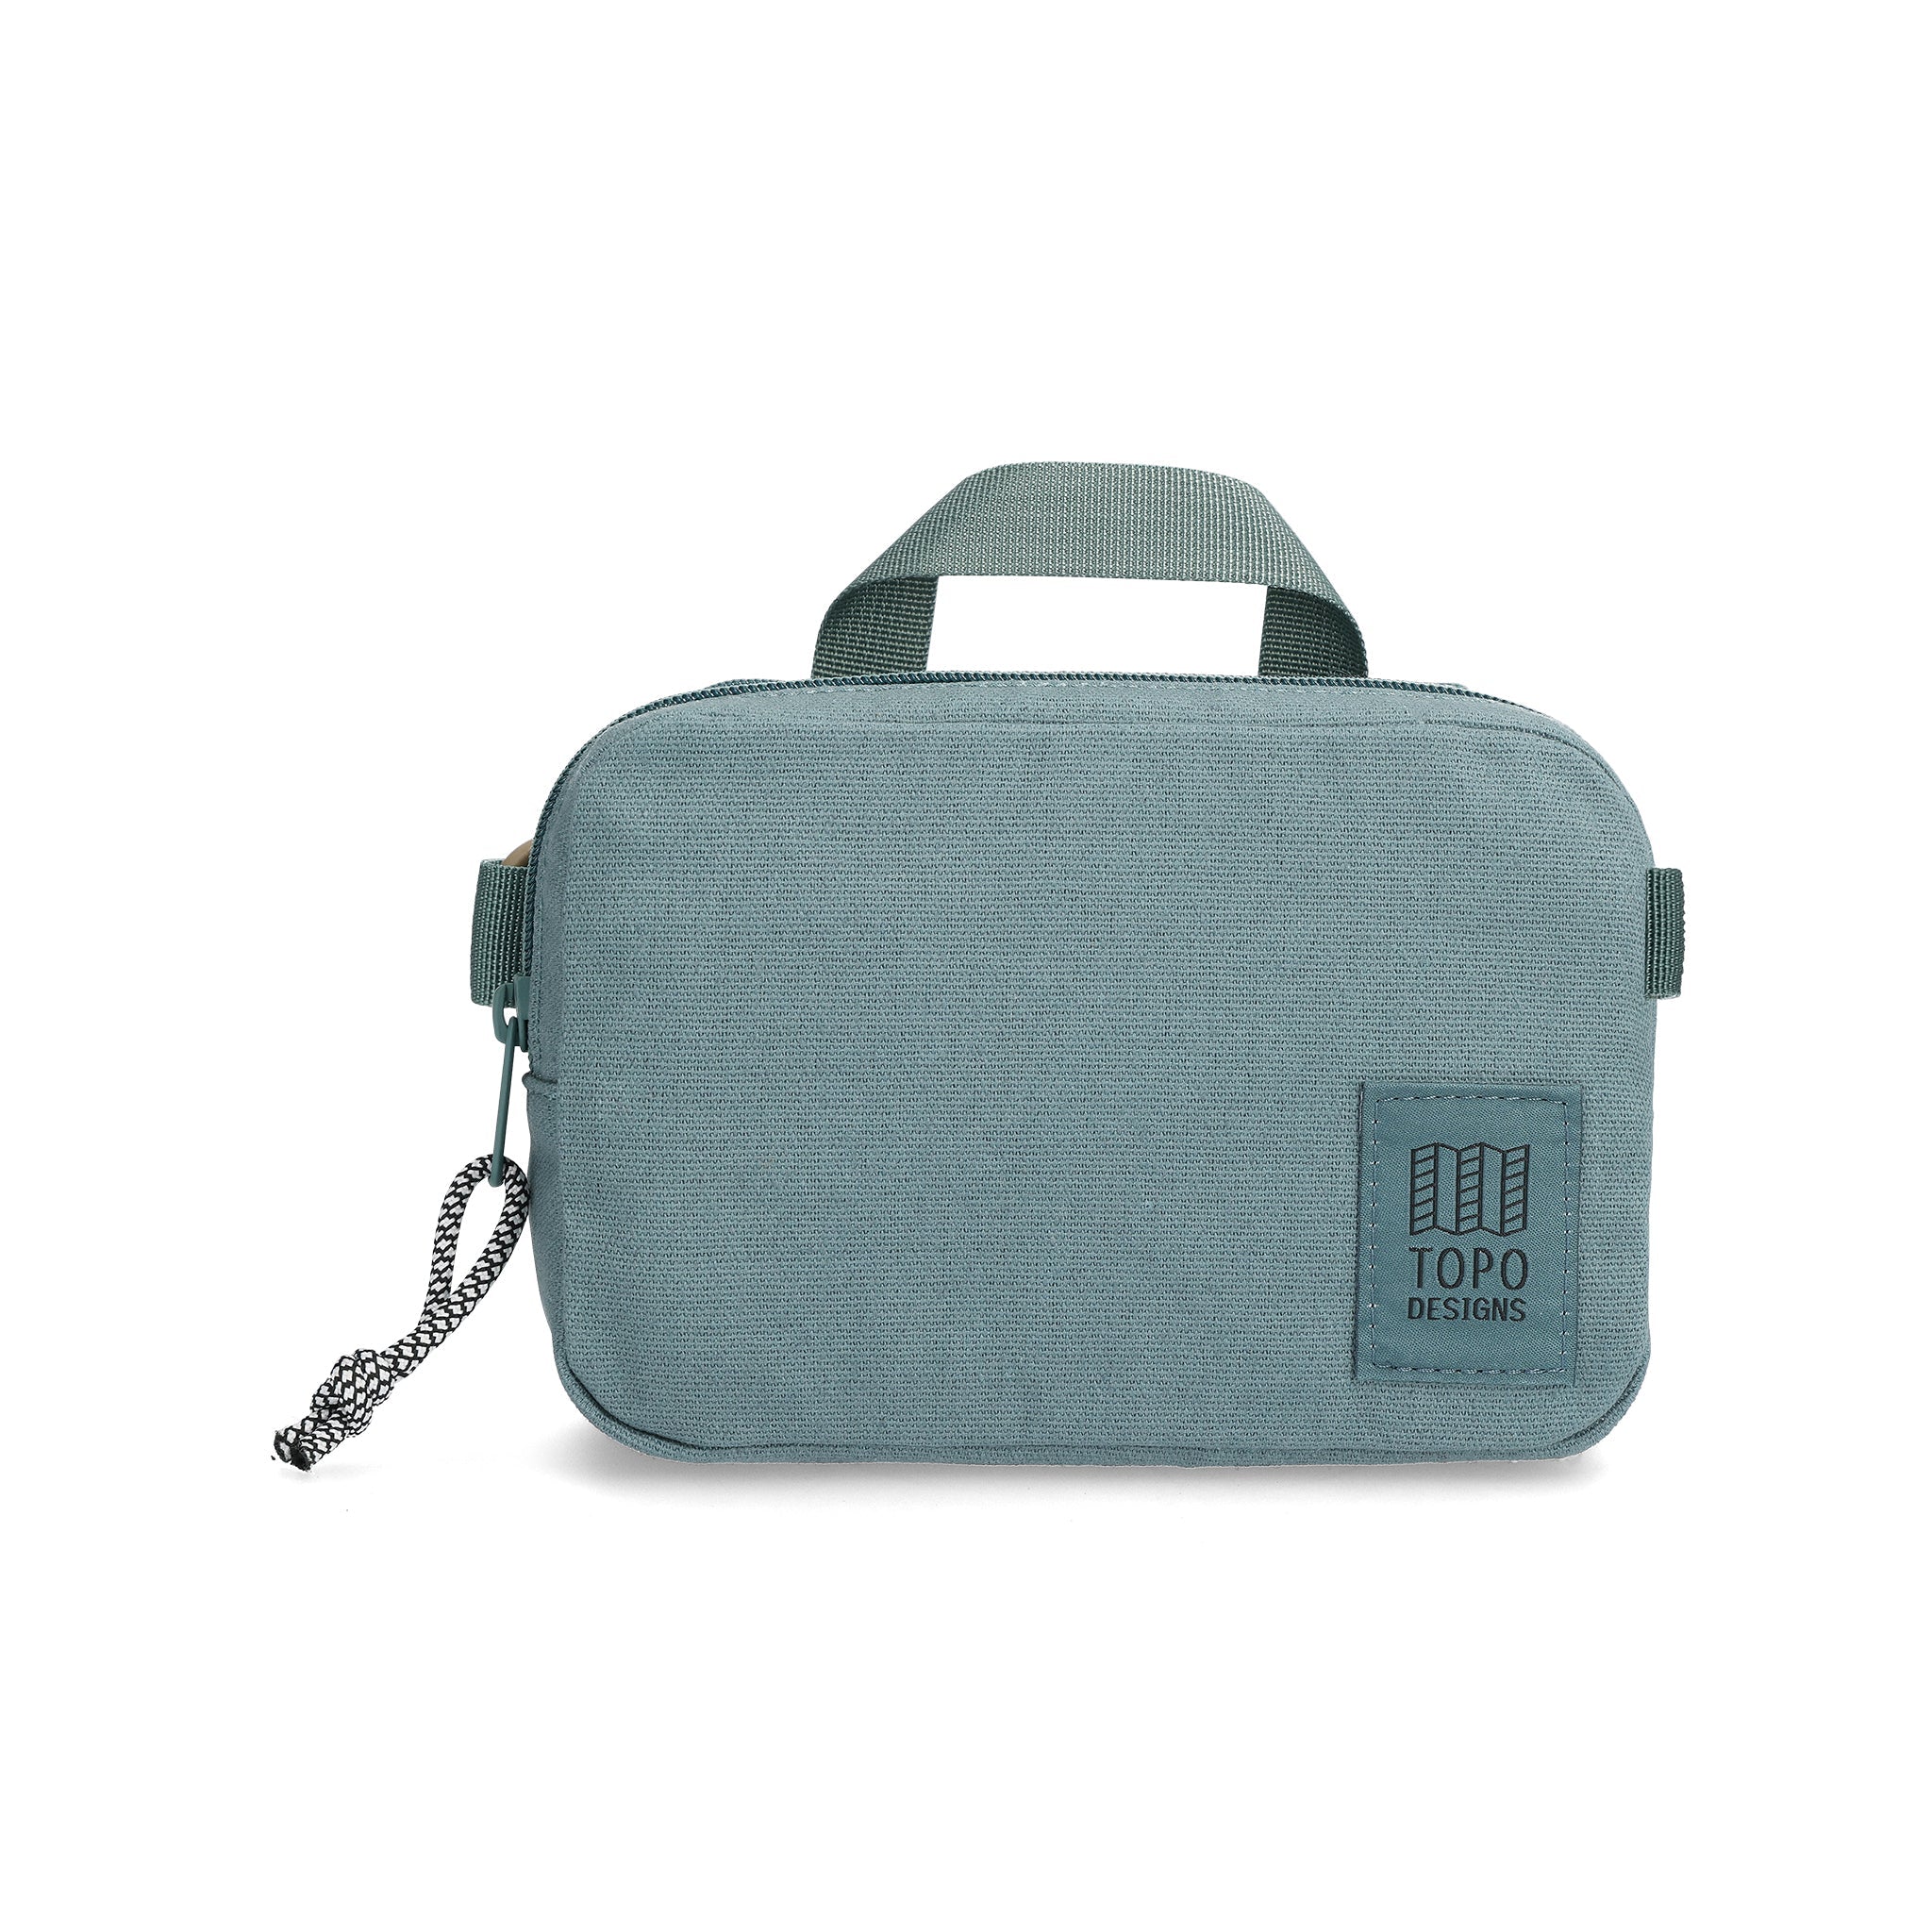 Front View of Topo Designs Dirt Belt Bag in "Sea Pine"